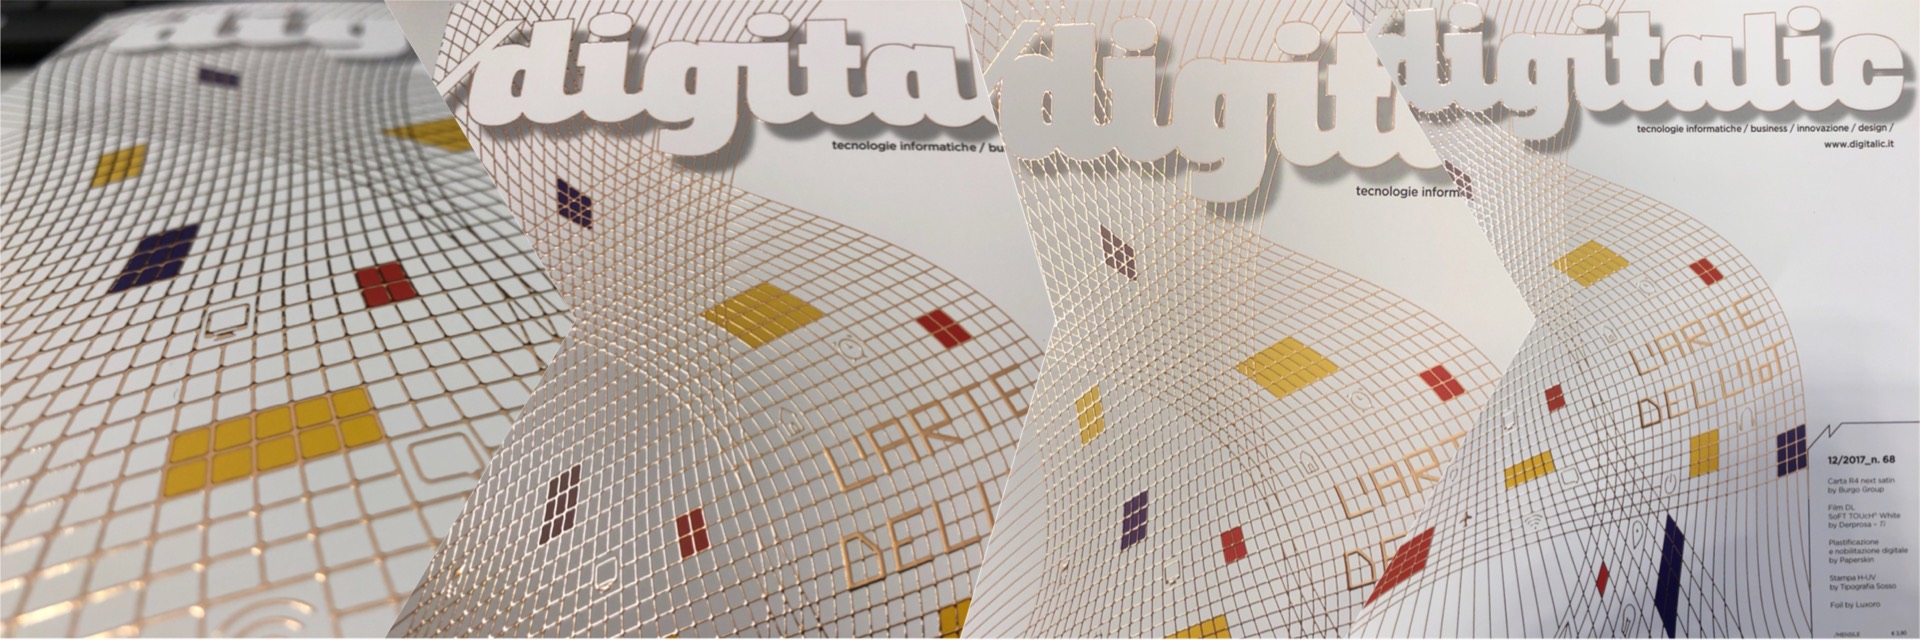 Digitalic  n. 68 – L’arte dell’IoT